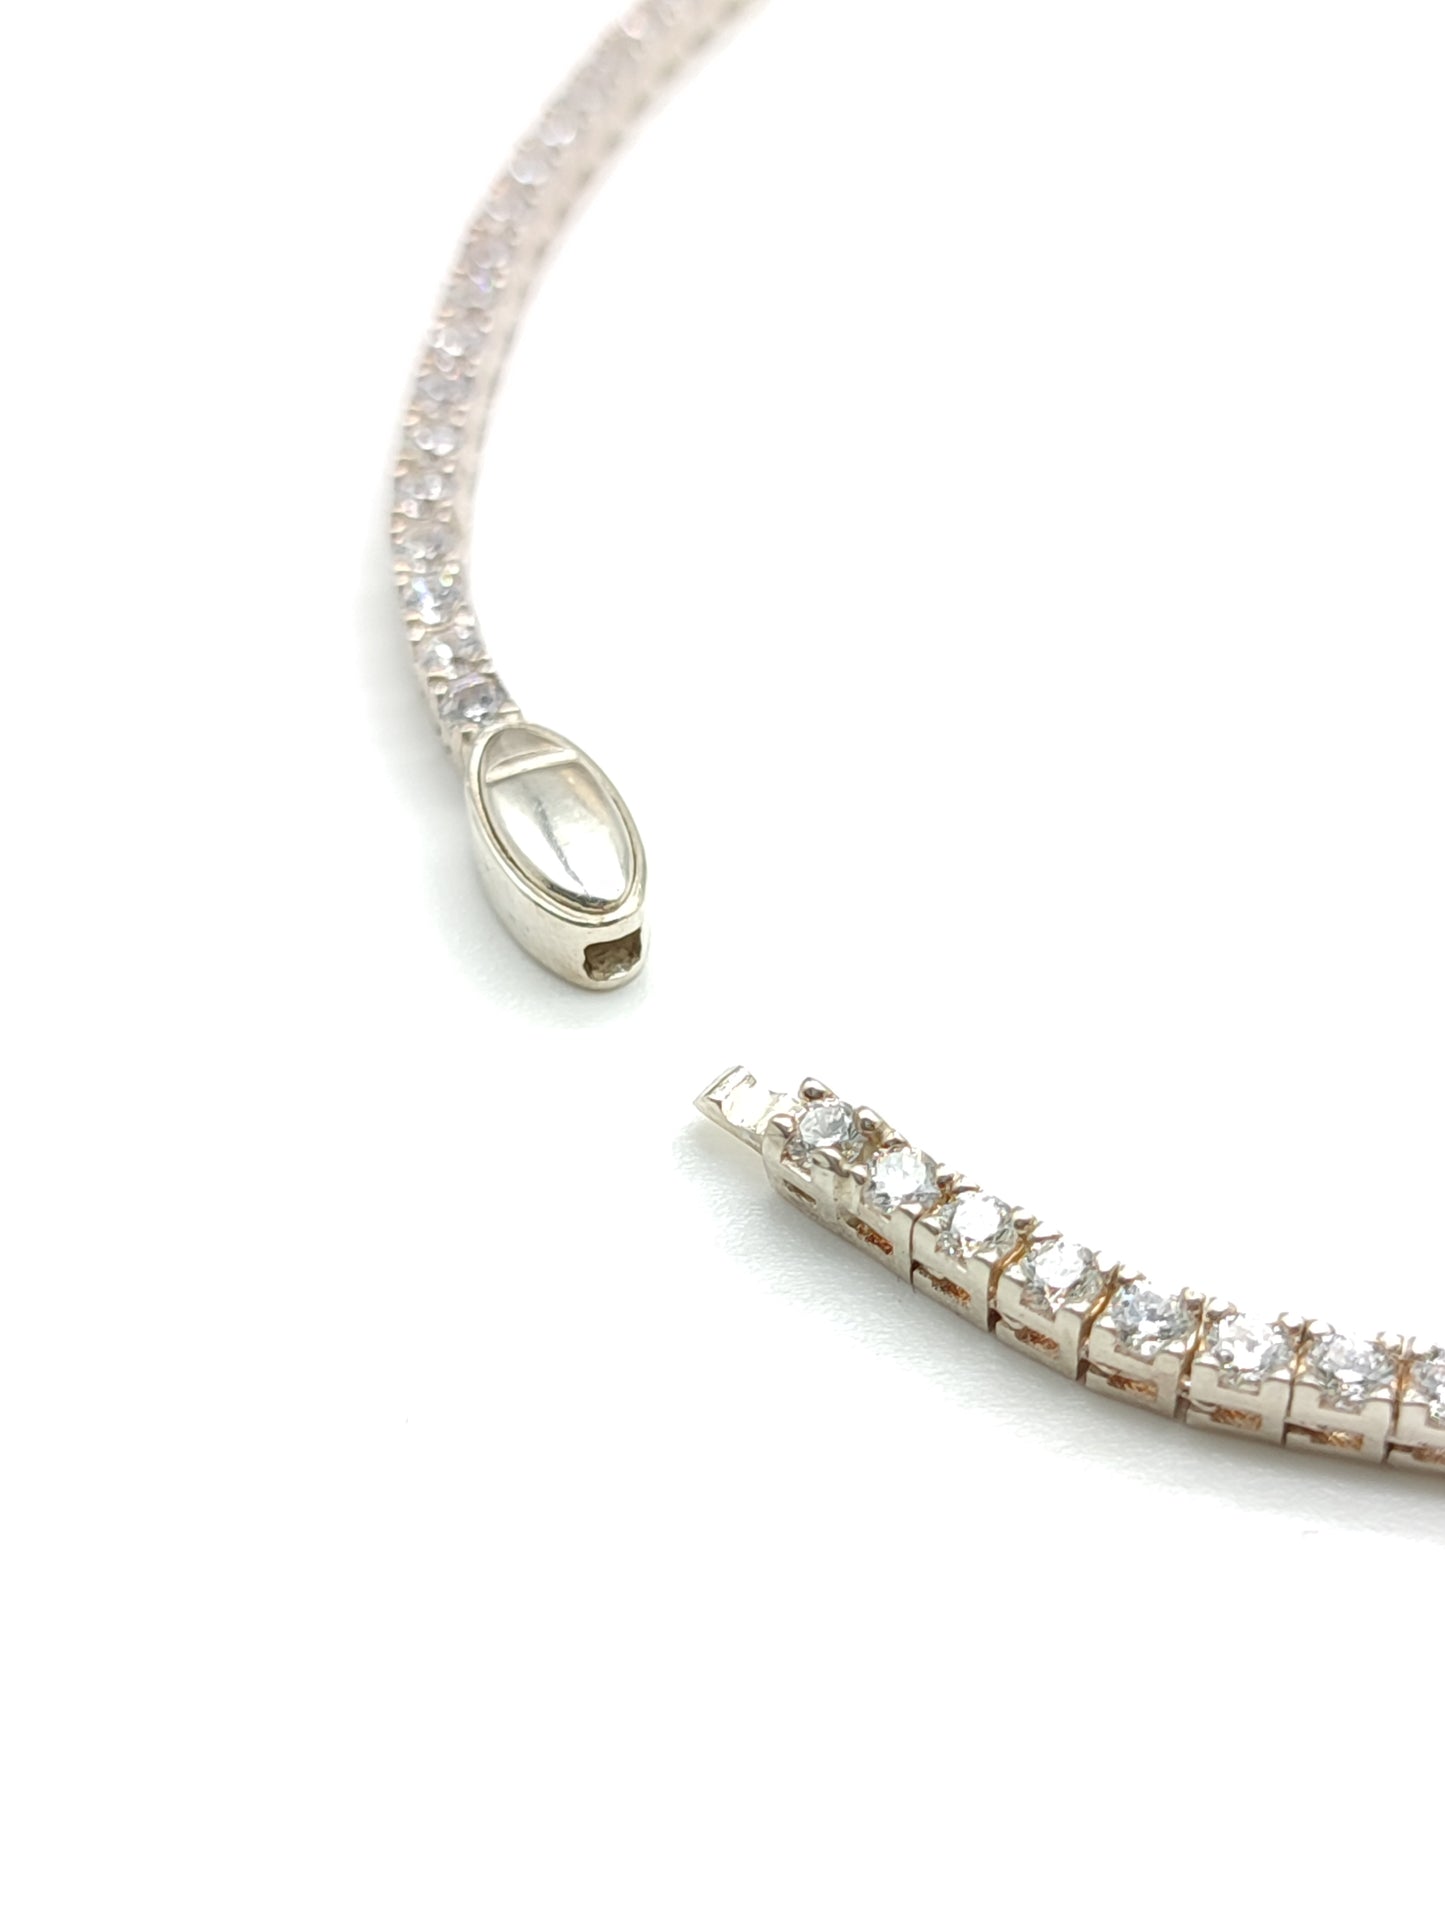 Silver tennis necklace